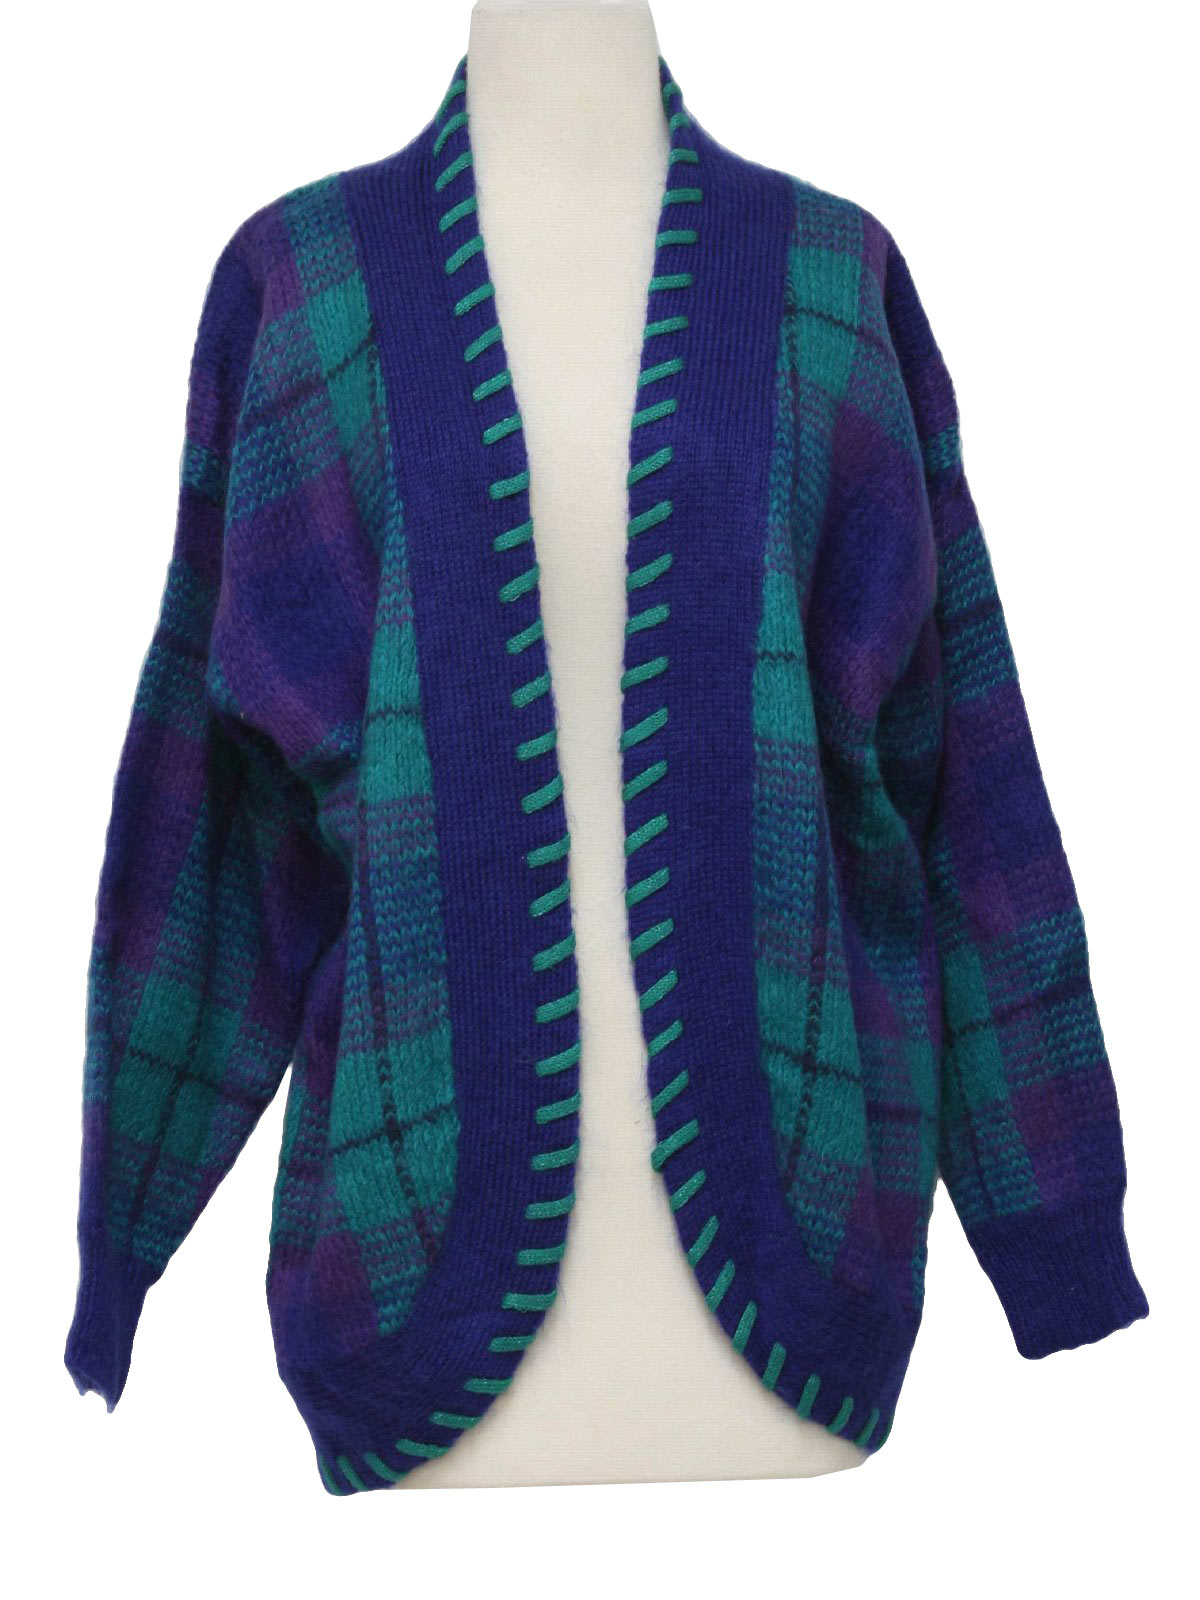 Retro Nineties Caridgan Sweater: 90s -Diversity- Womens teal, purple ...